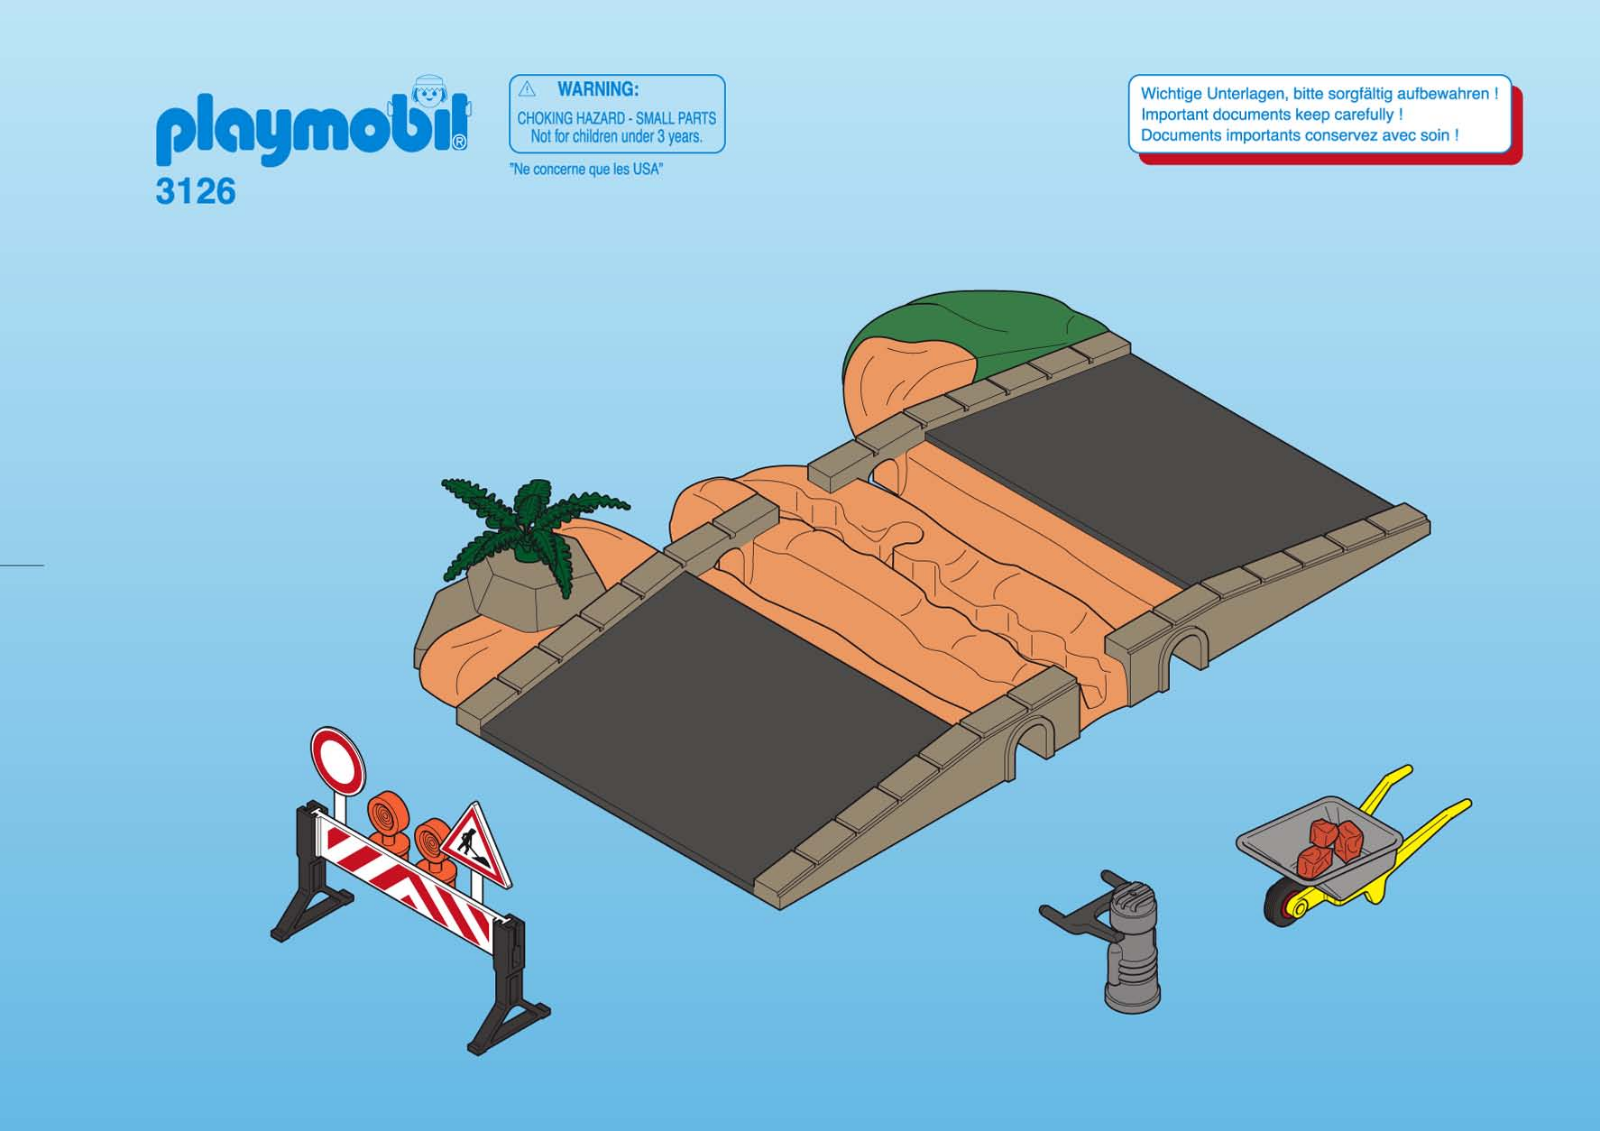 Playmobil 3126 Instructions